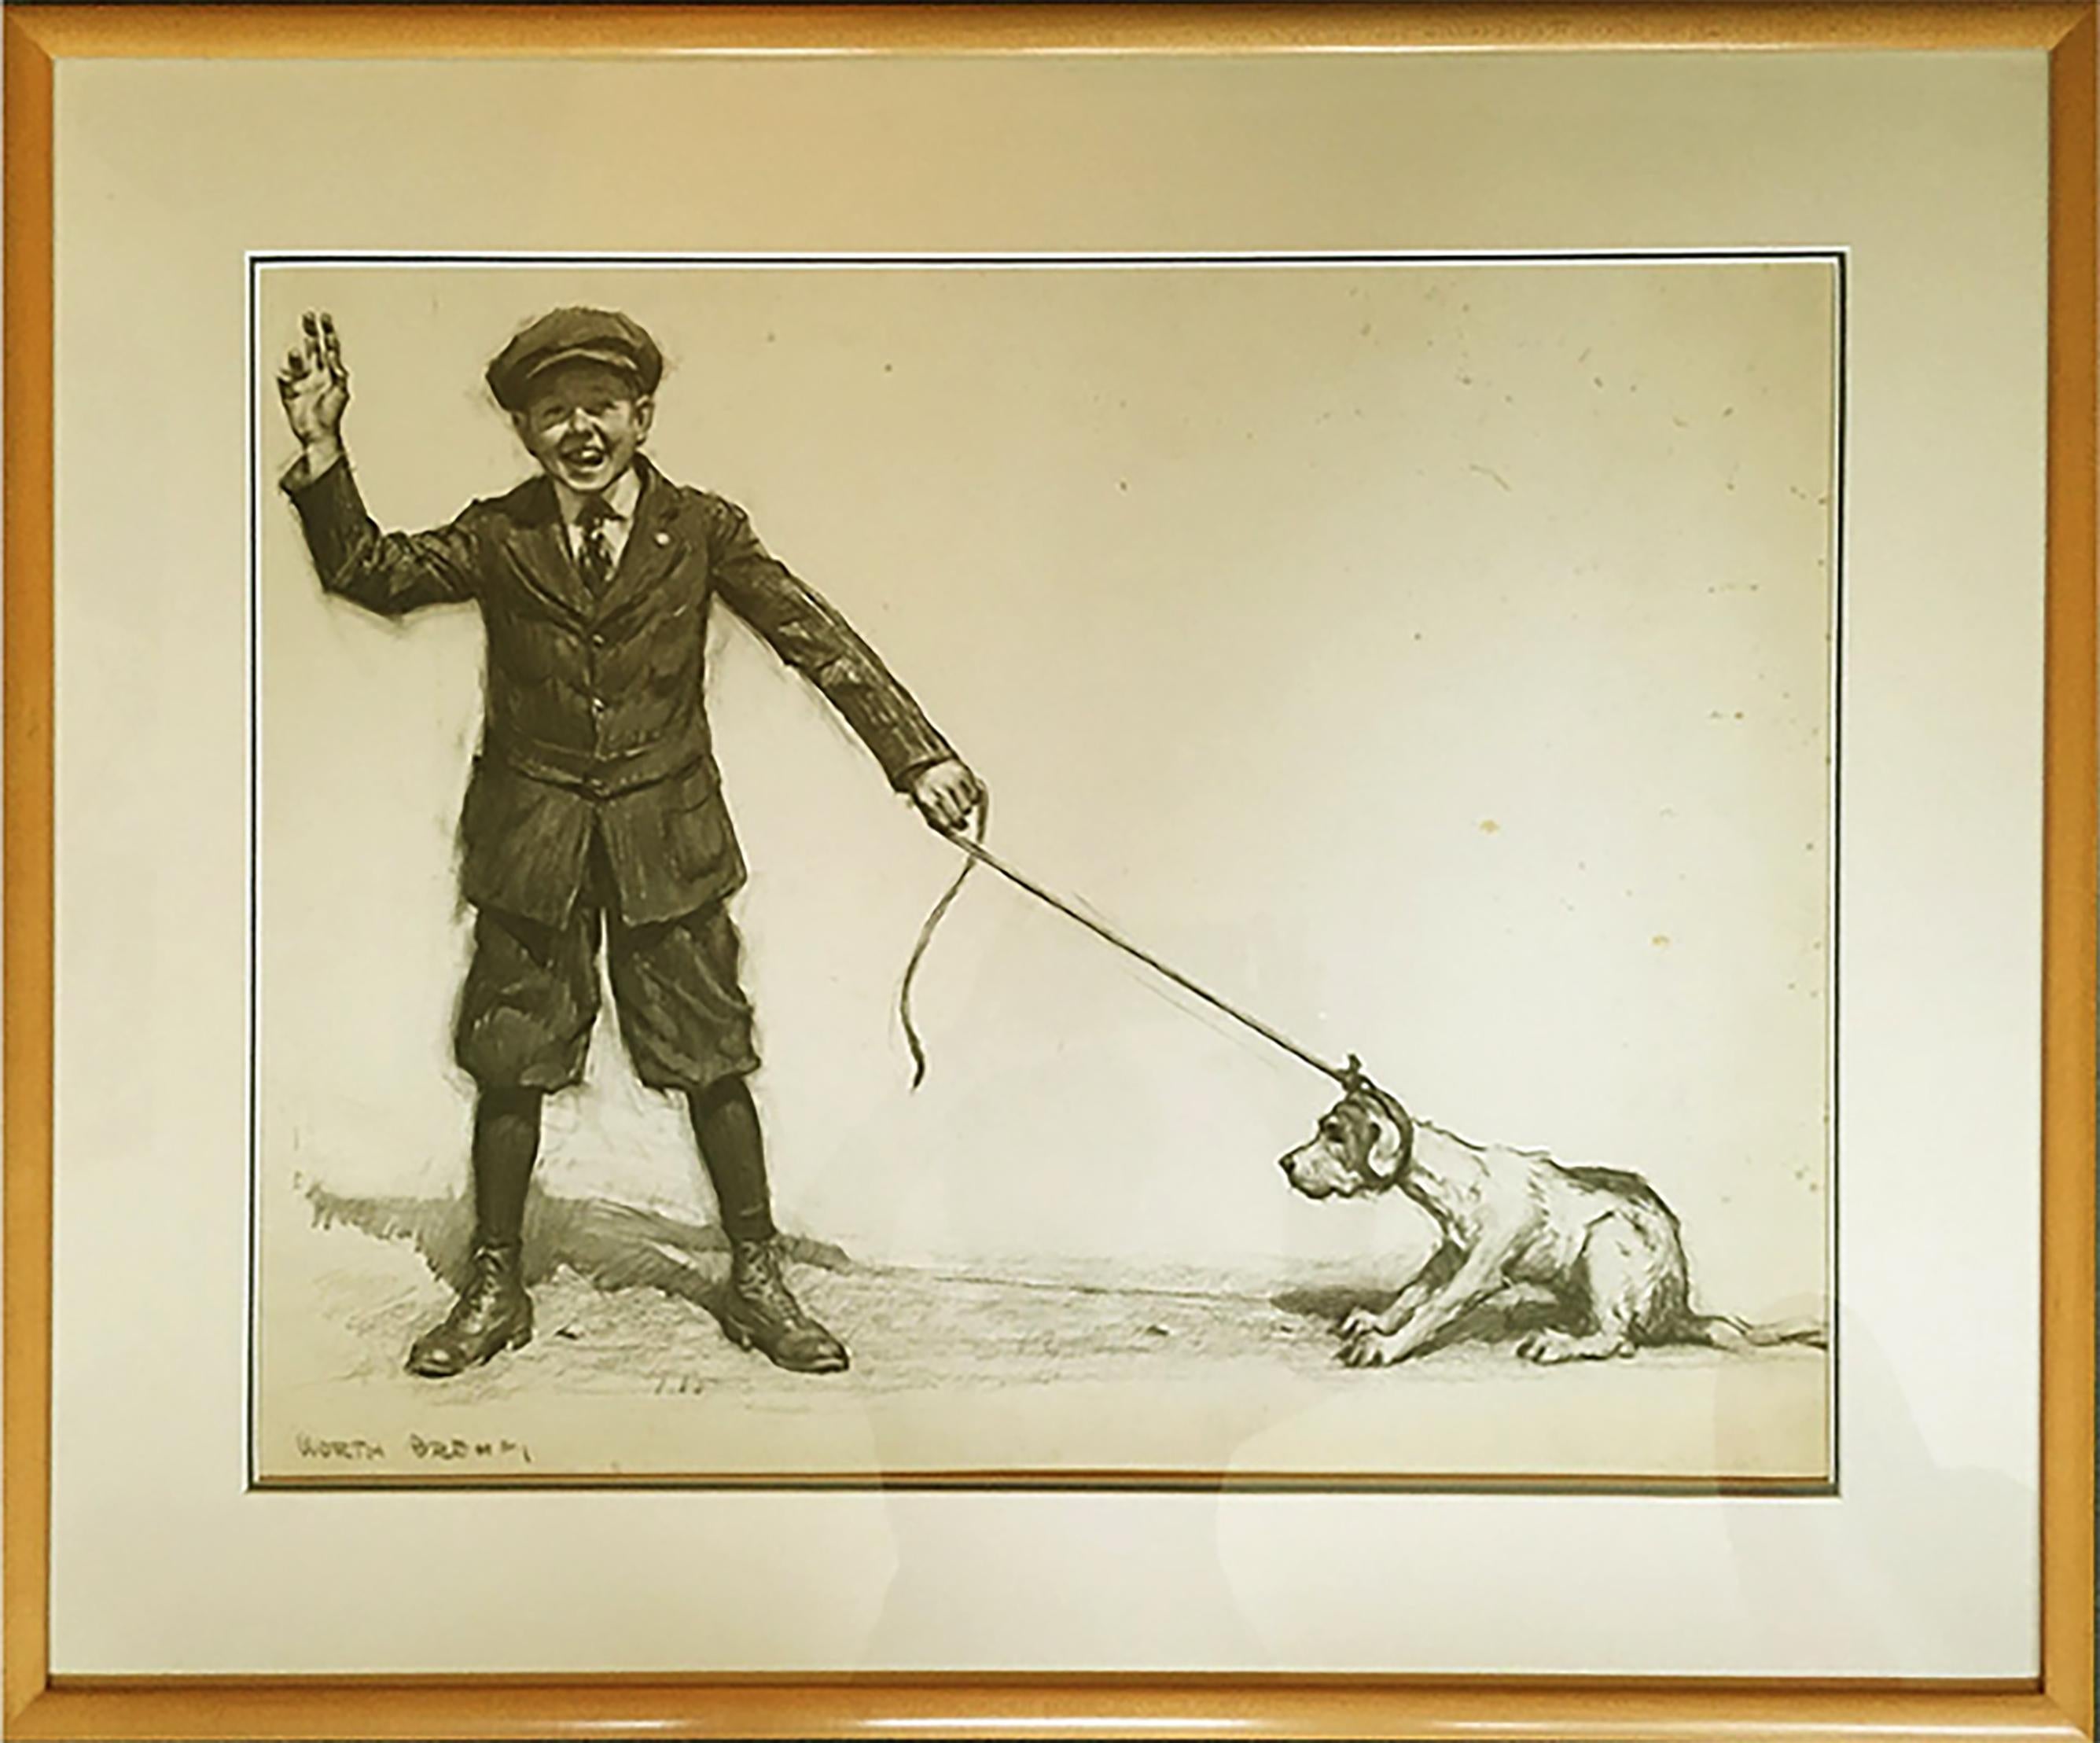 Sam pulling his new dog, Walter John - Art by Worth Brehm